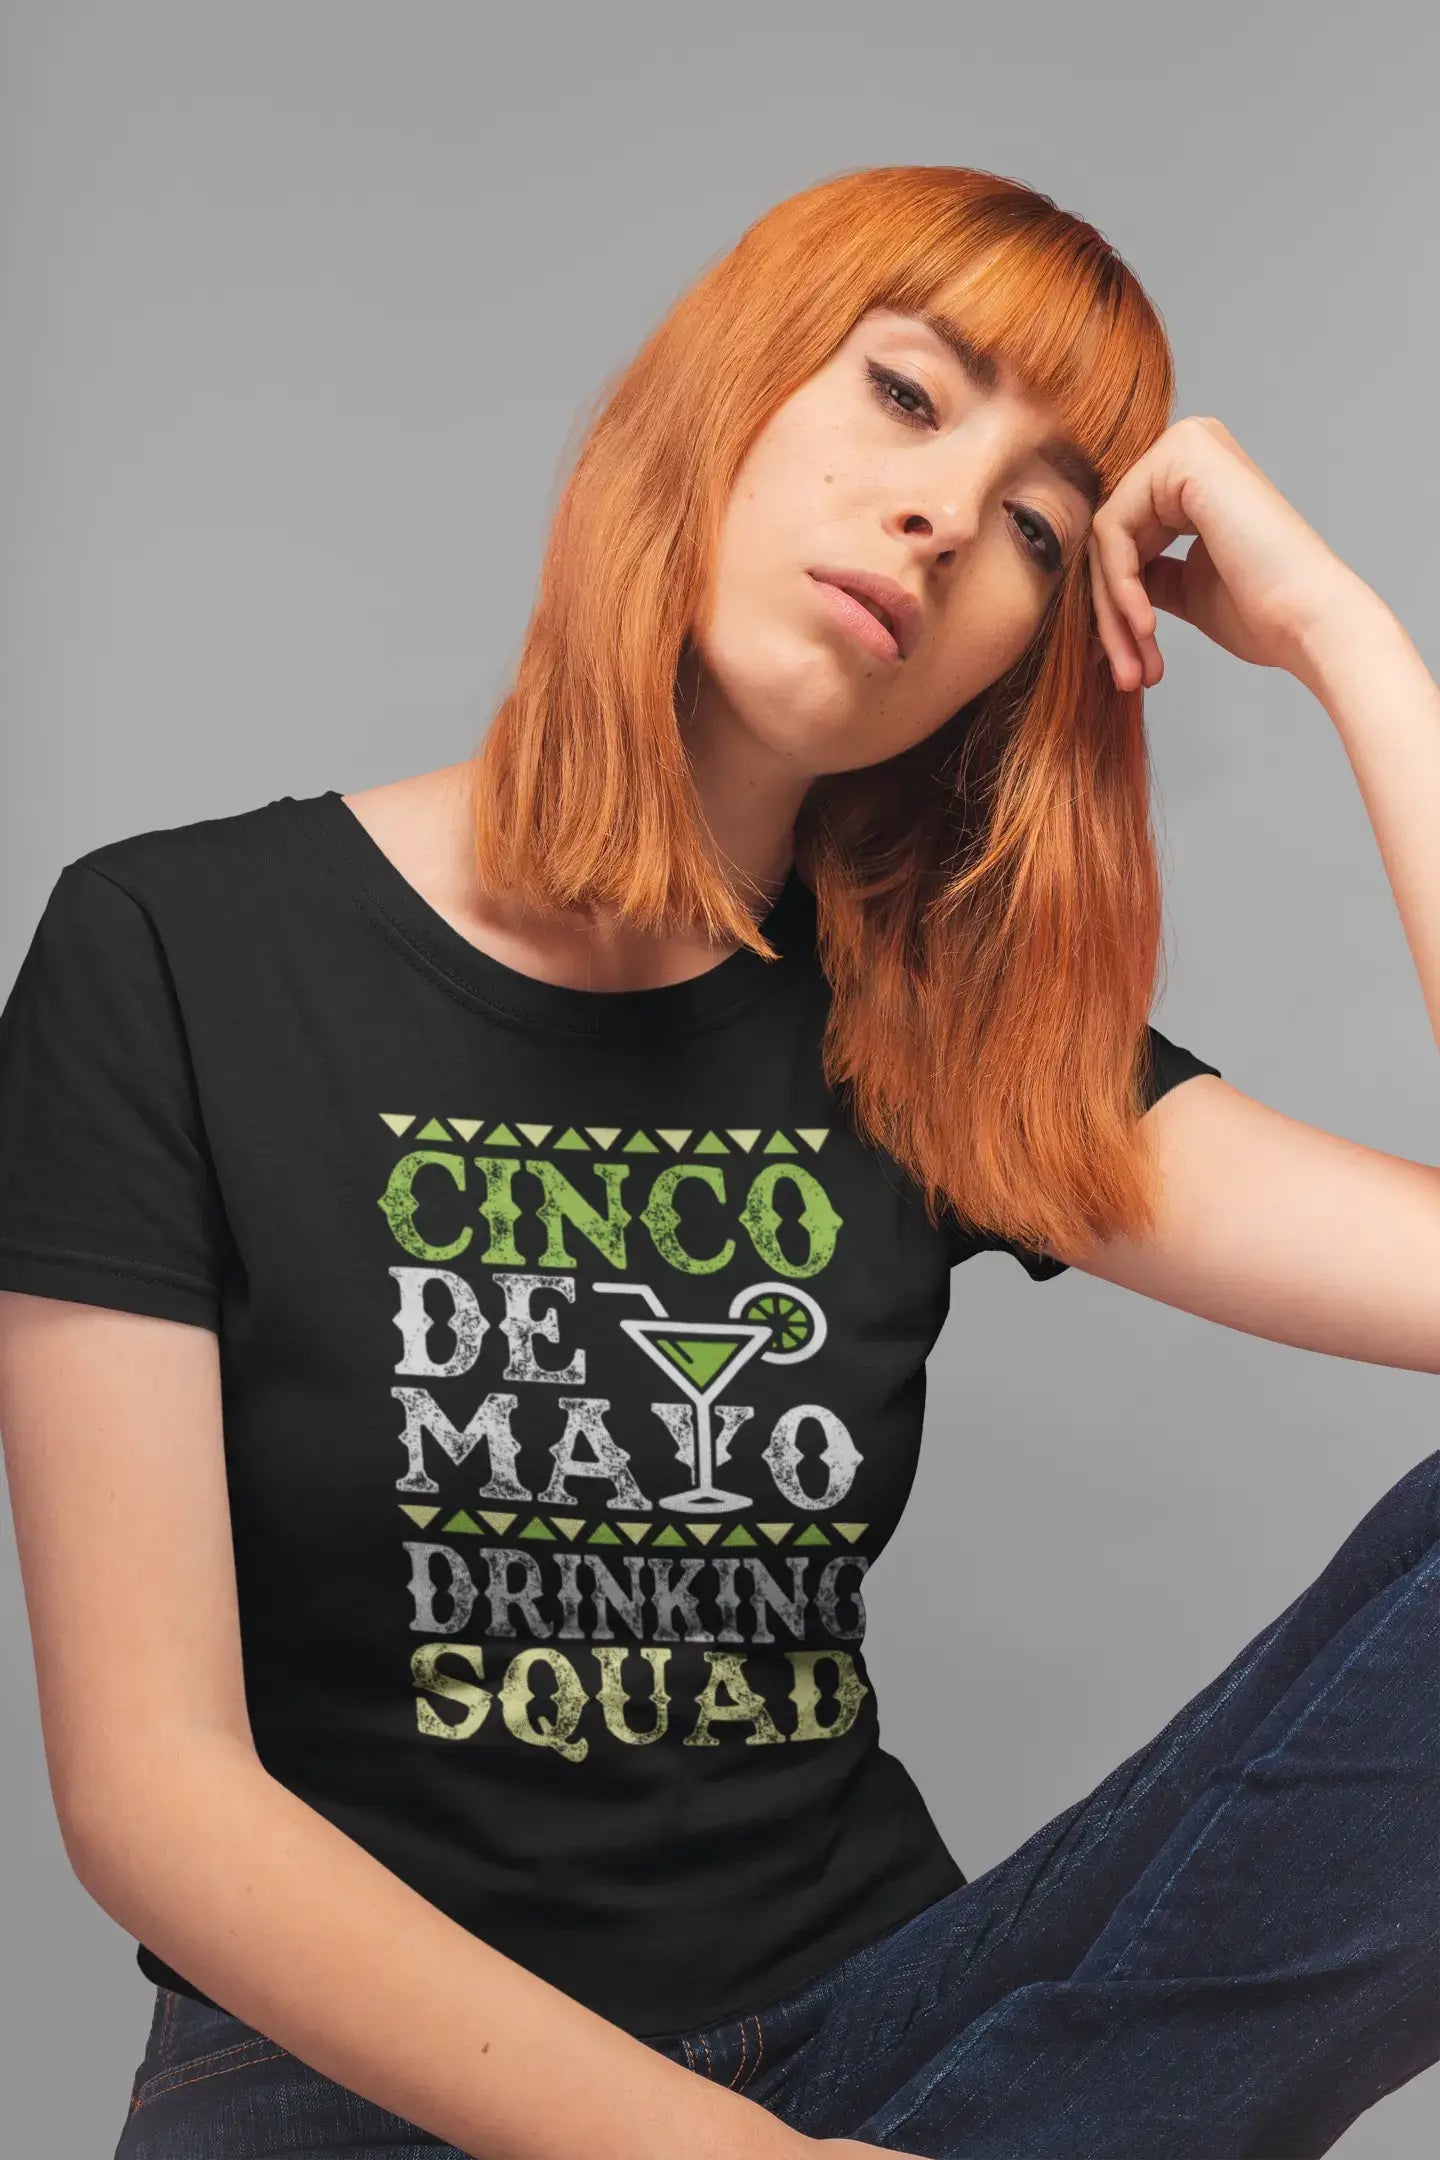 ULTRABASIC Women's Organic T-Shirt Cinco de Mayo Drinking Squad - Funny Mexican Tequila Tee Shirt